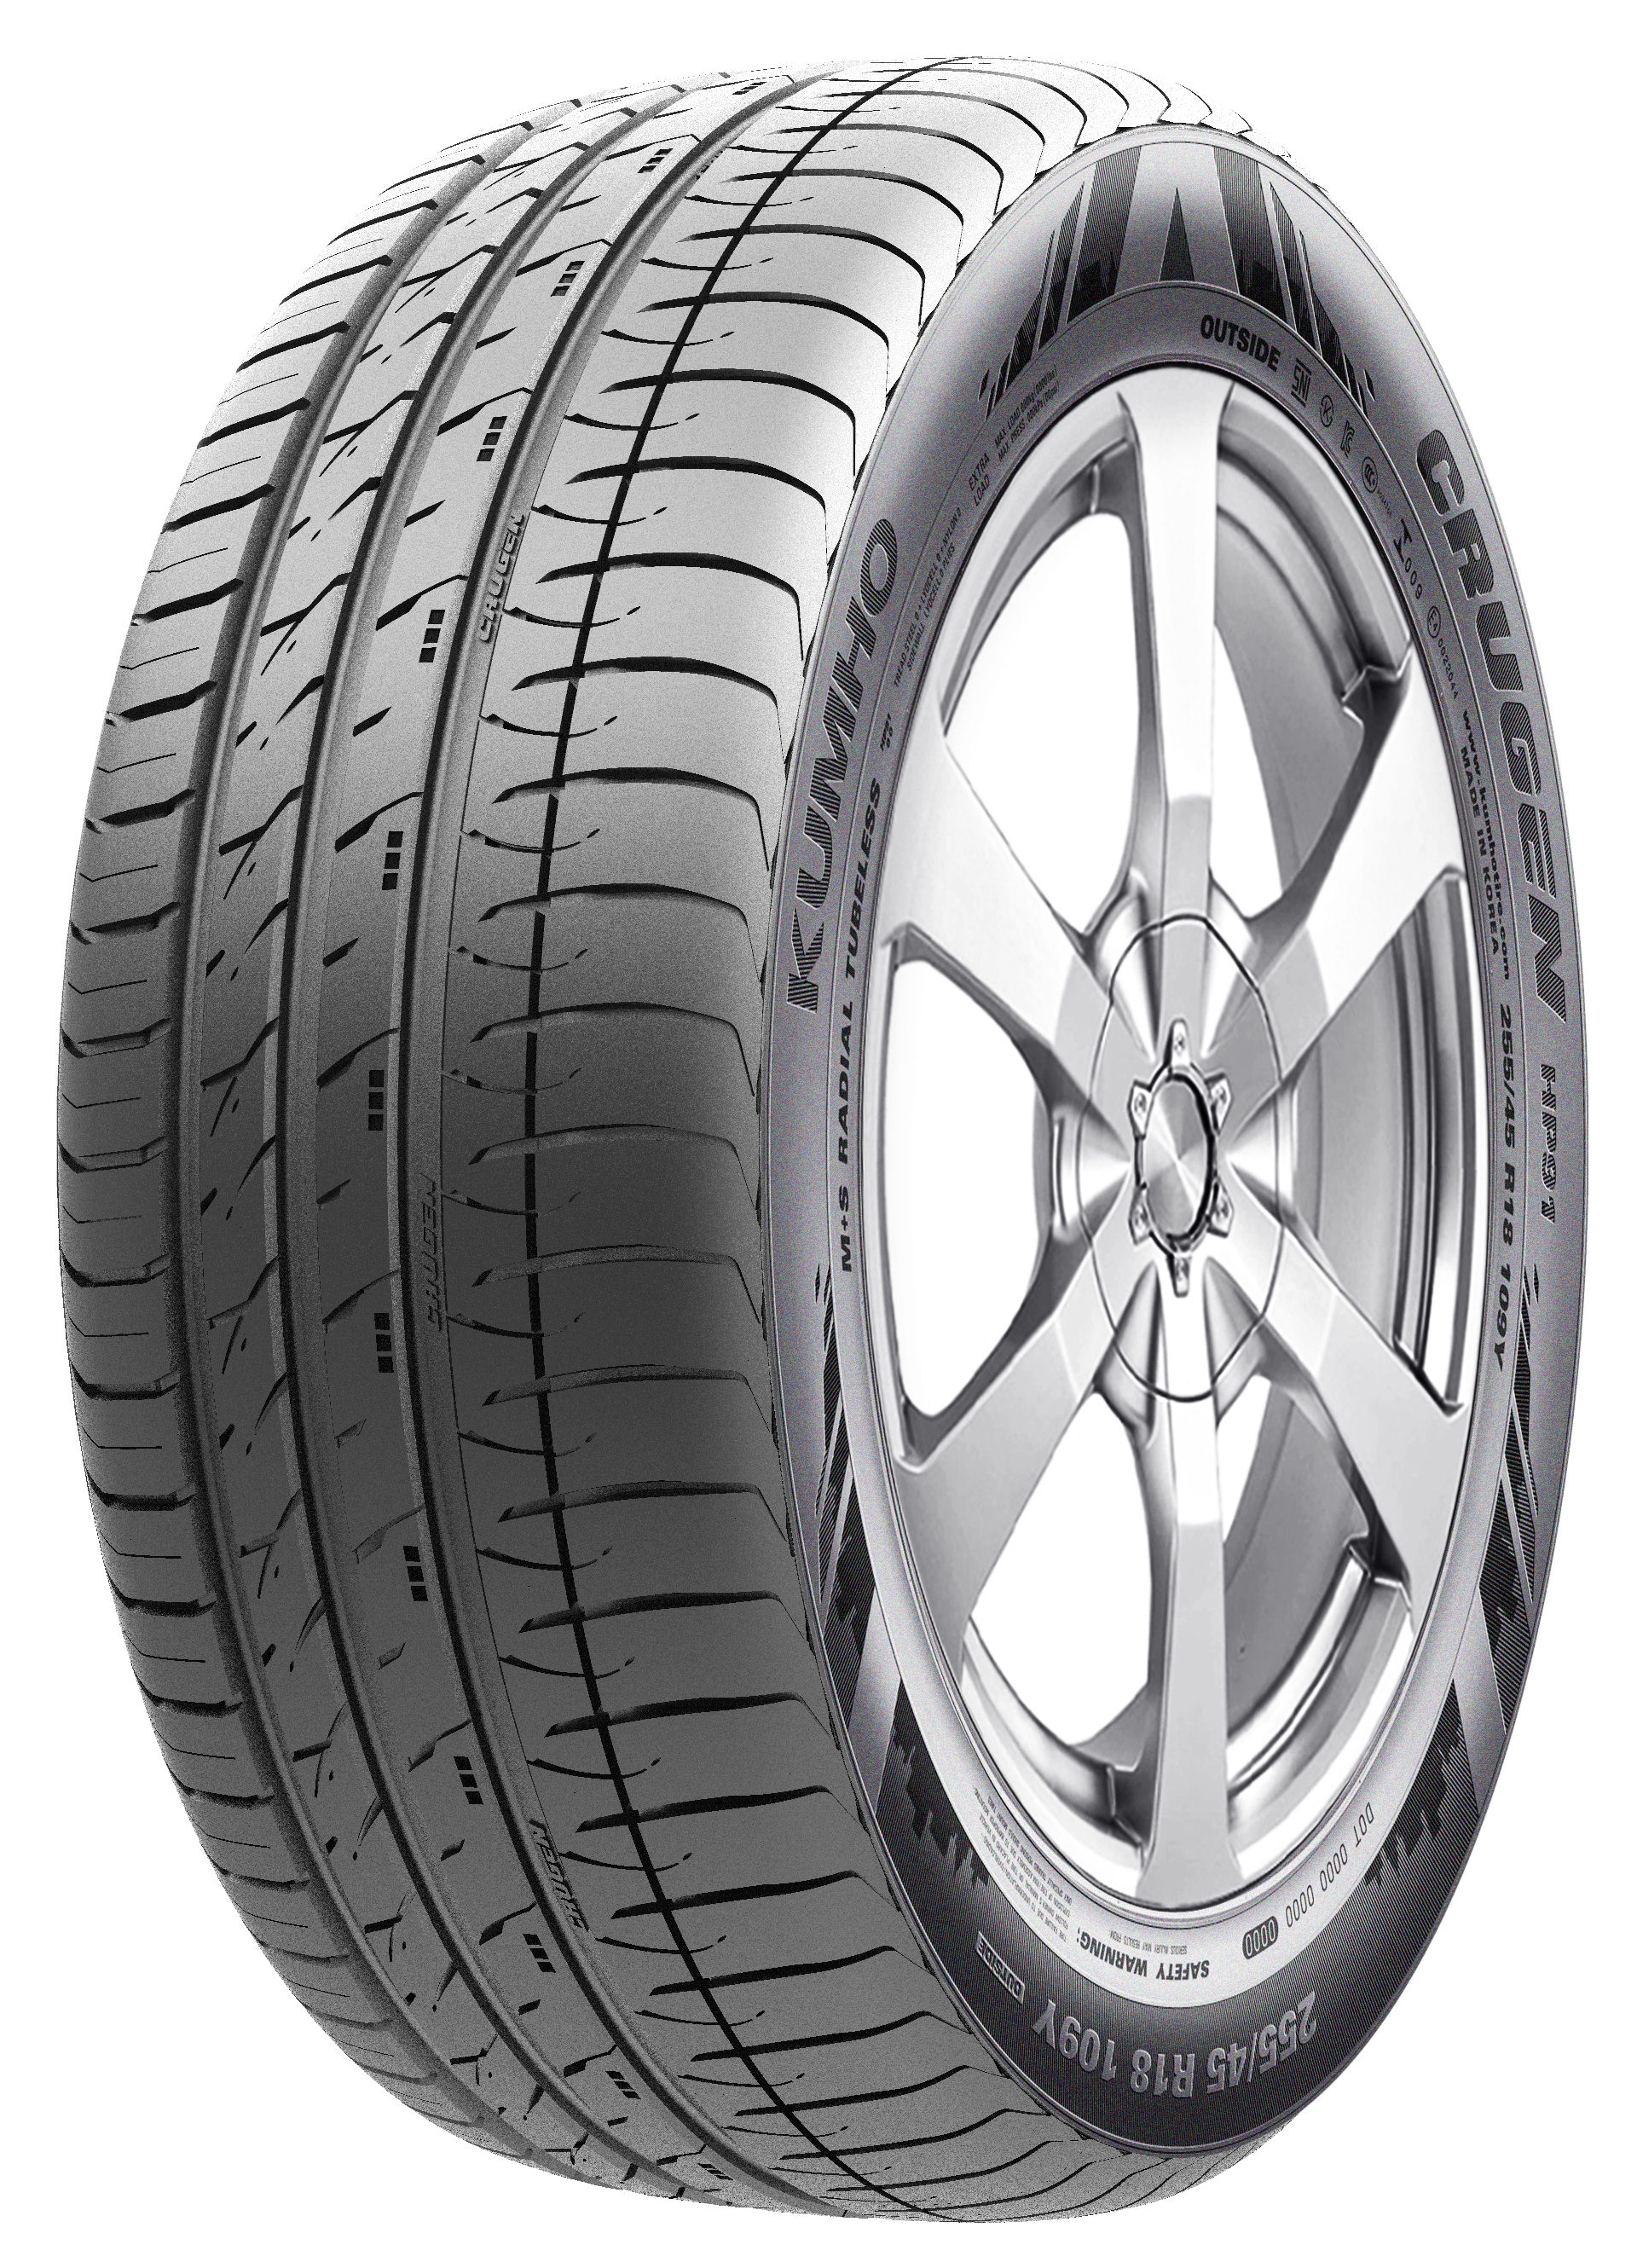 Kumho adds ‘lifestyle’ SUV tyre to 4×4 range